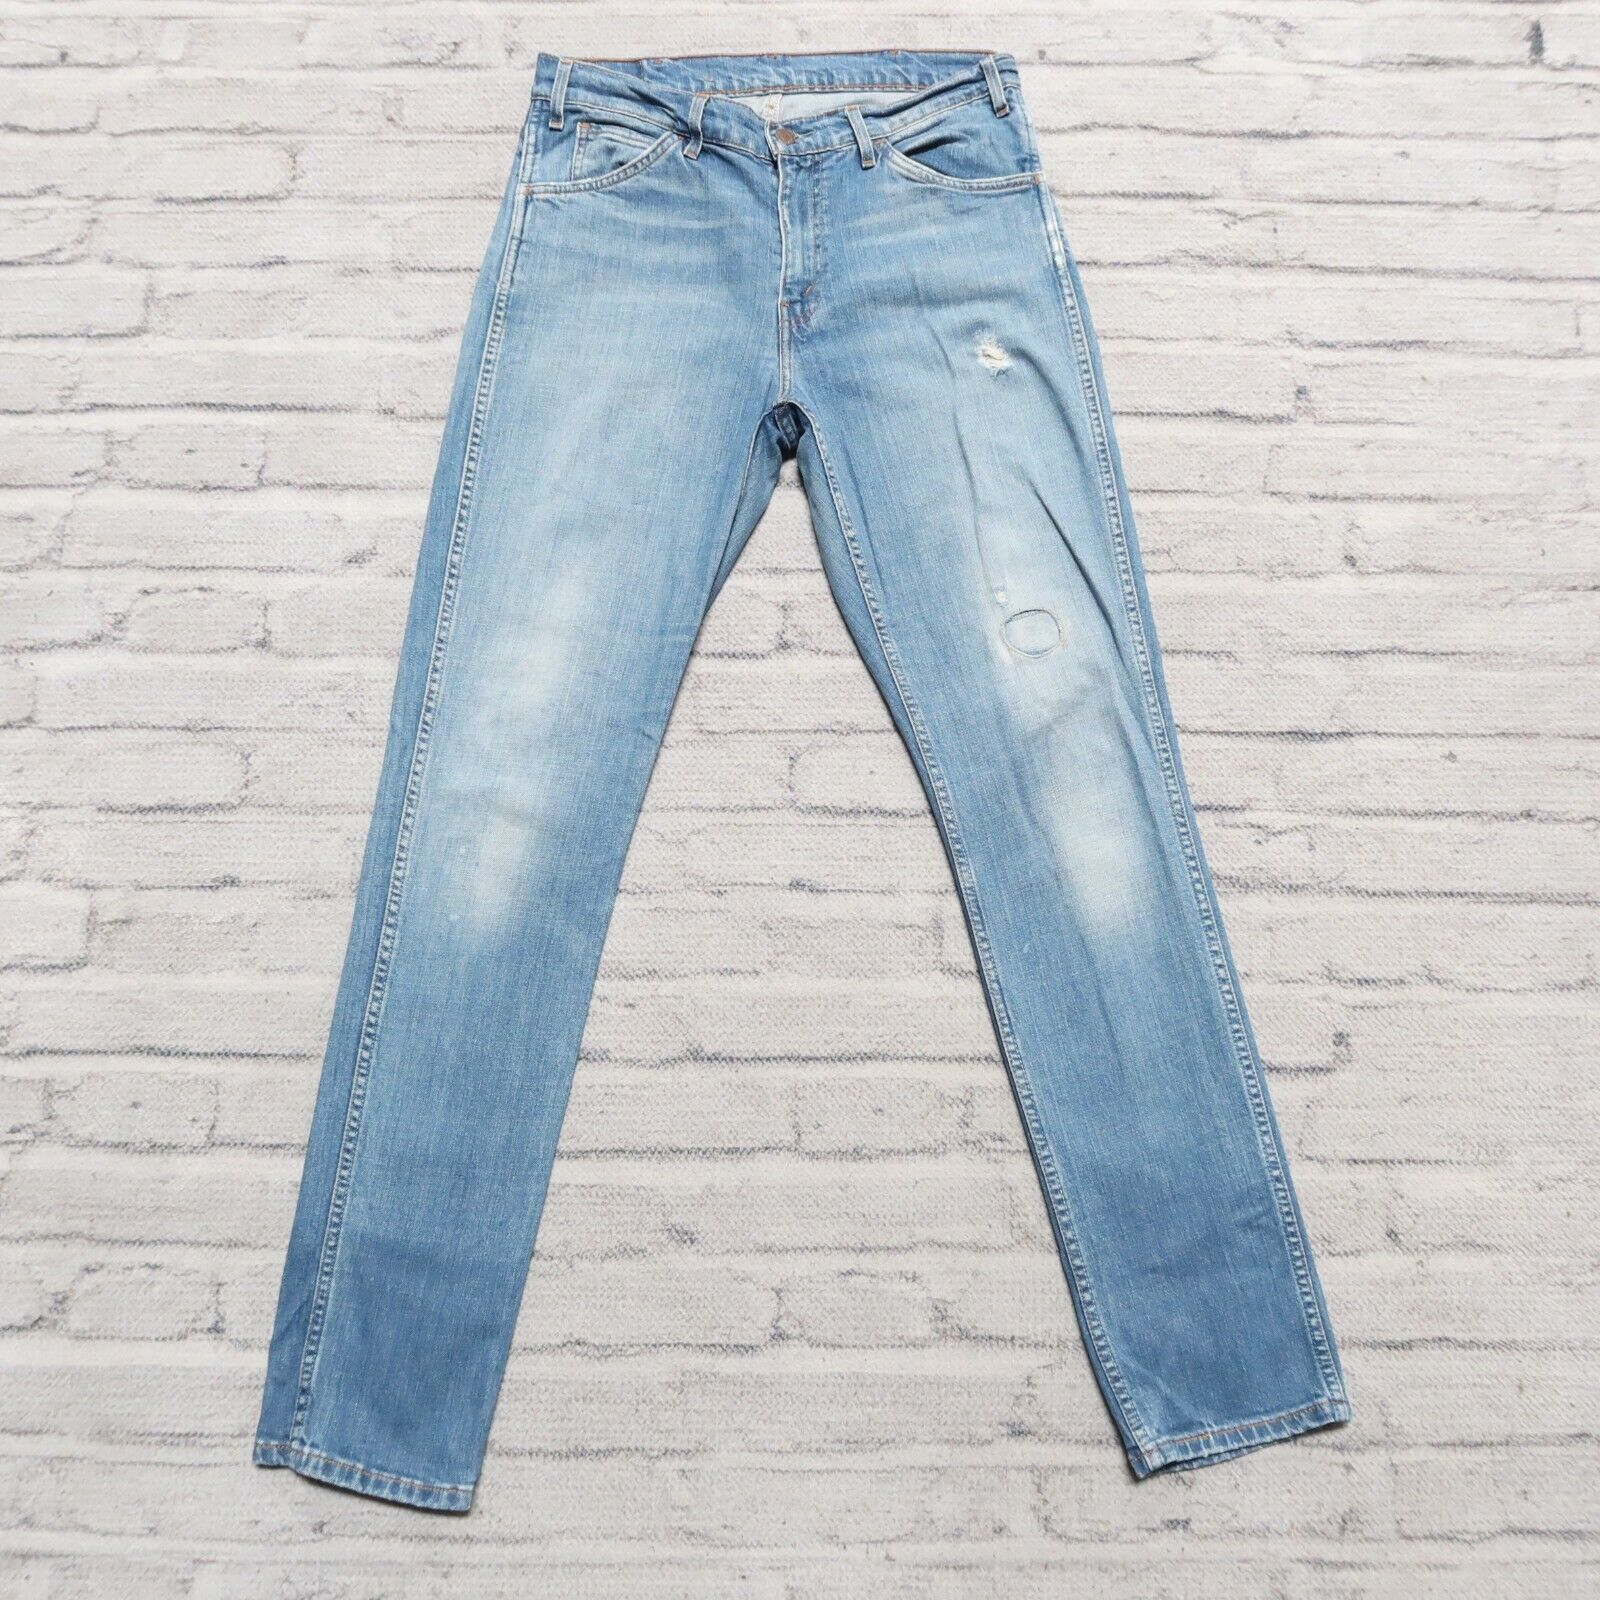 Levis LVC 606 Denim Jeans Made in Turkey Size 30